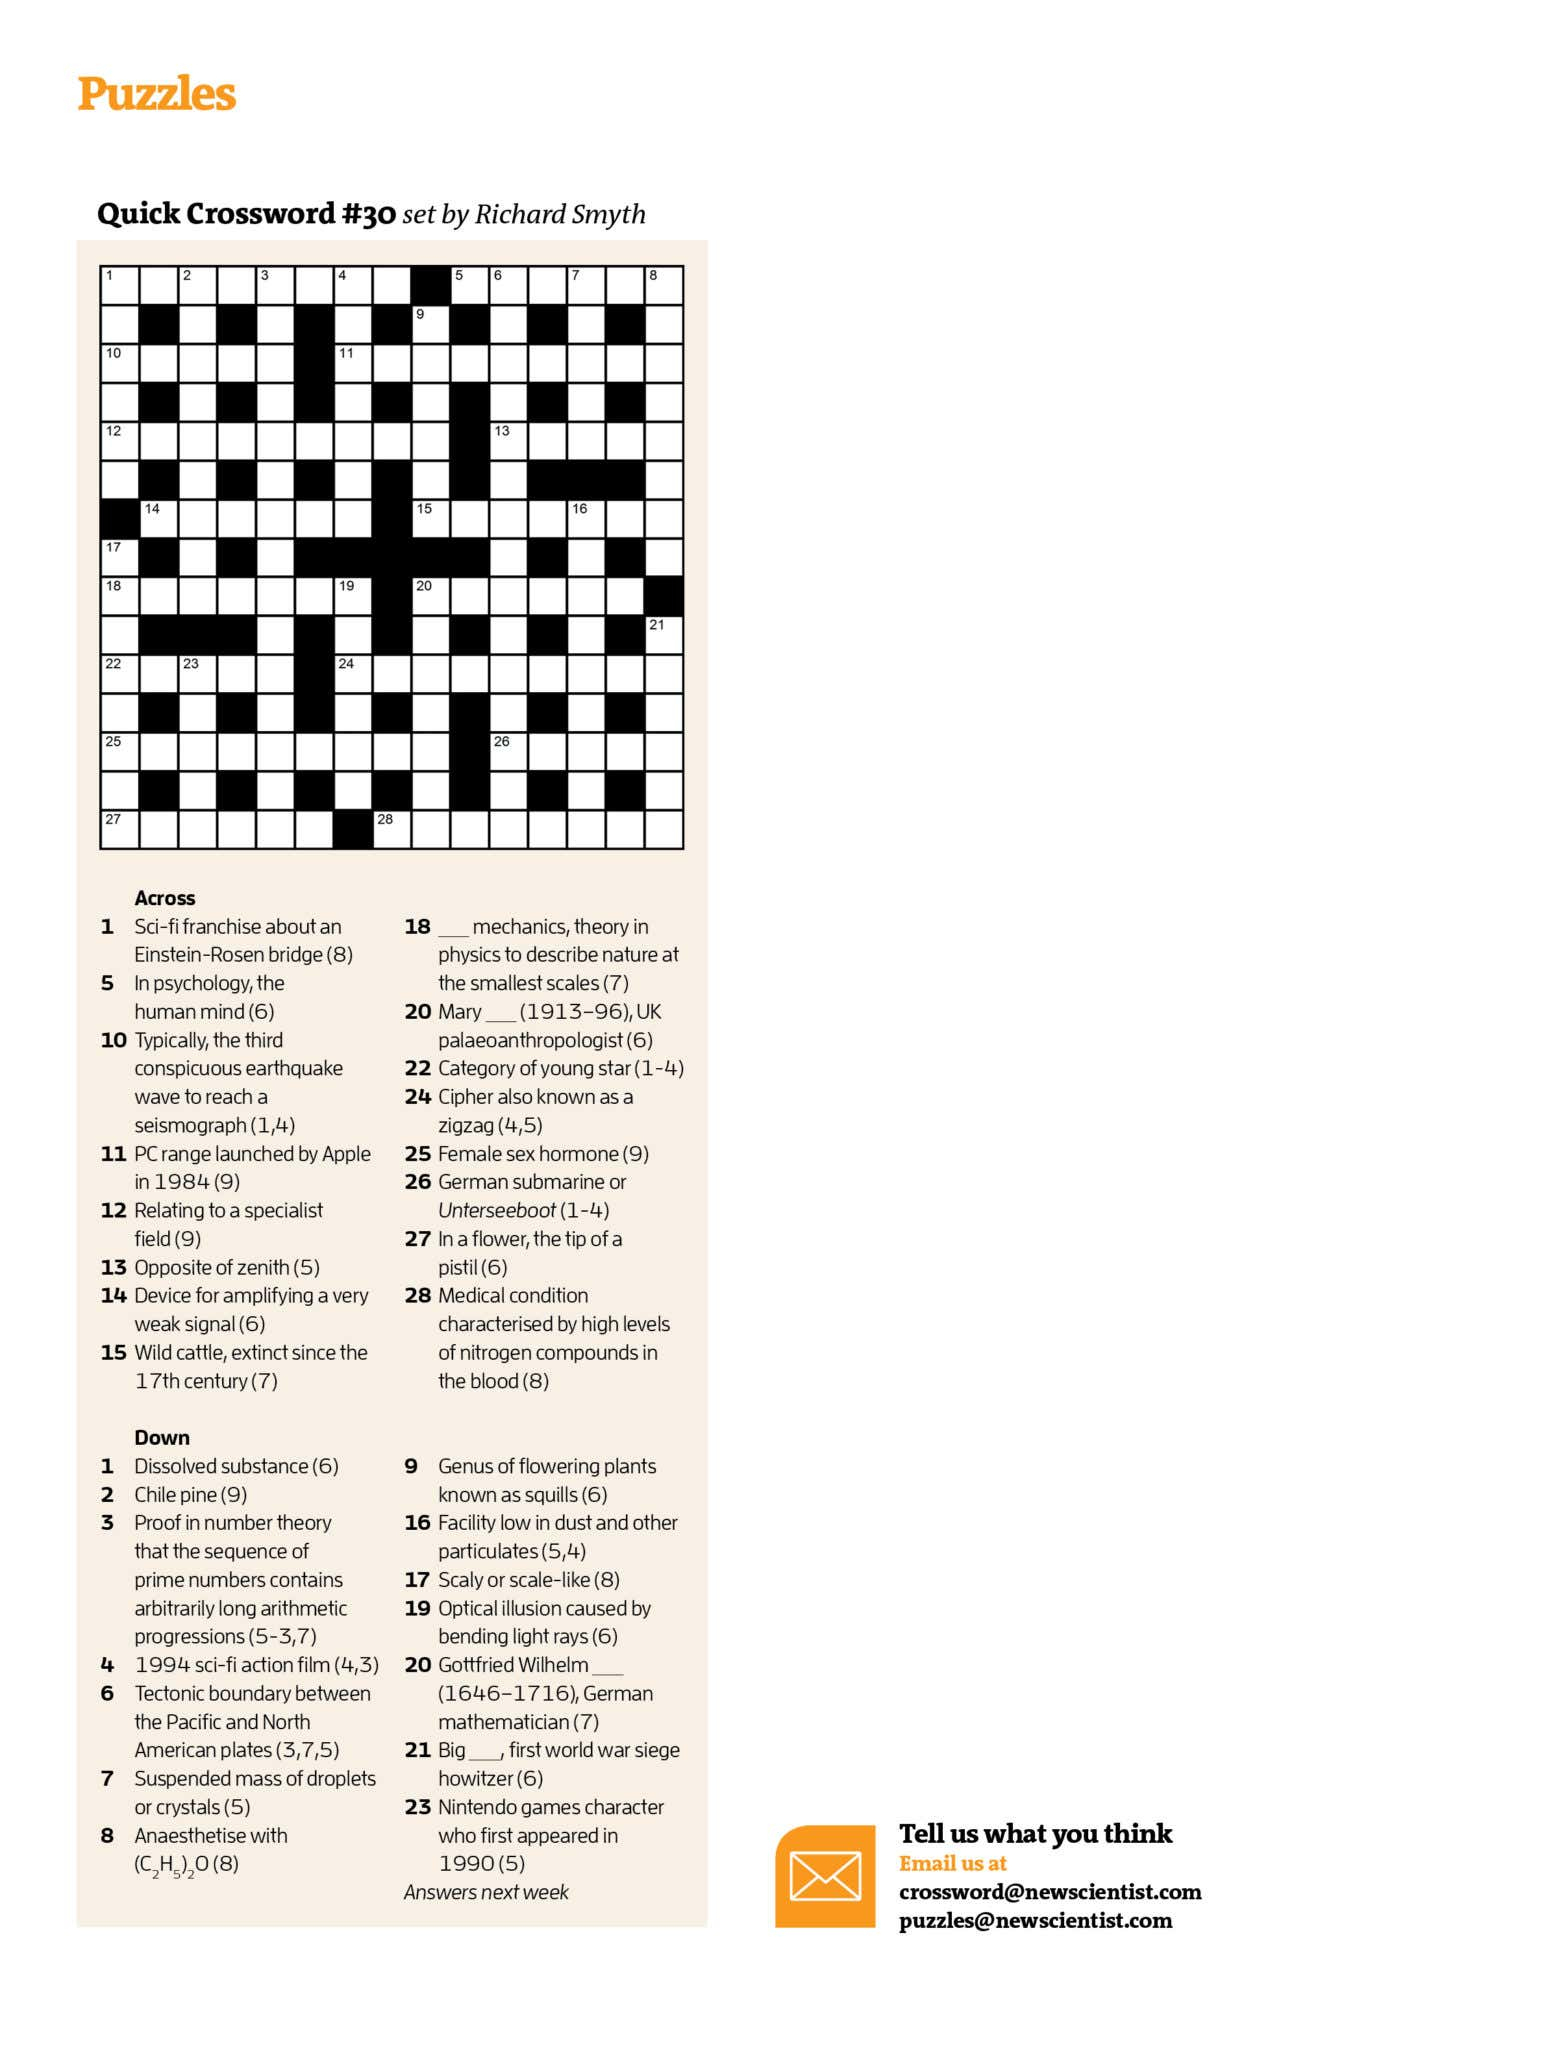 Quick Crossword #30 | New Scientist - Free Printable Quick Crossword Puzzles